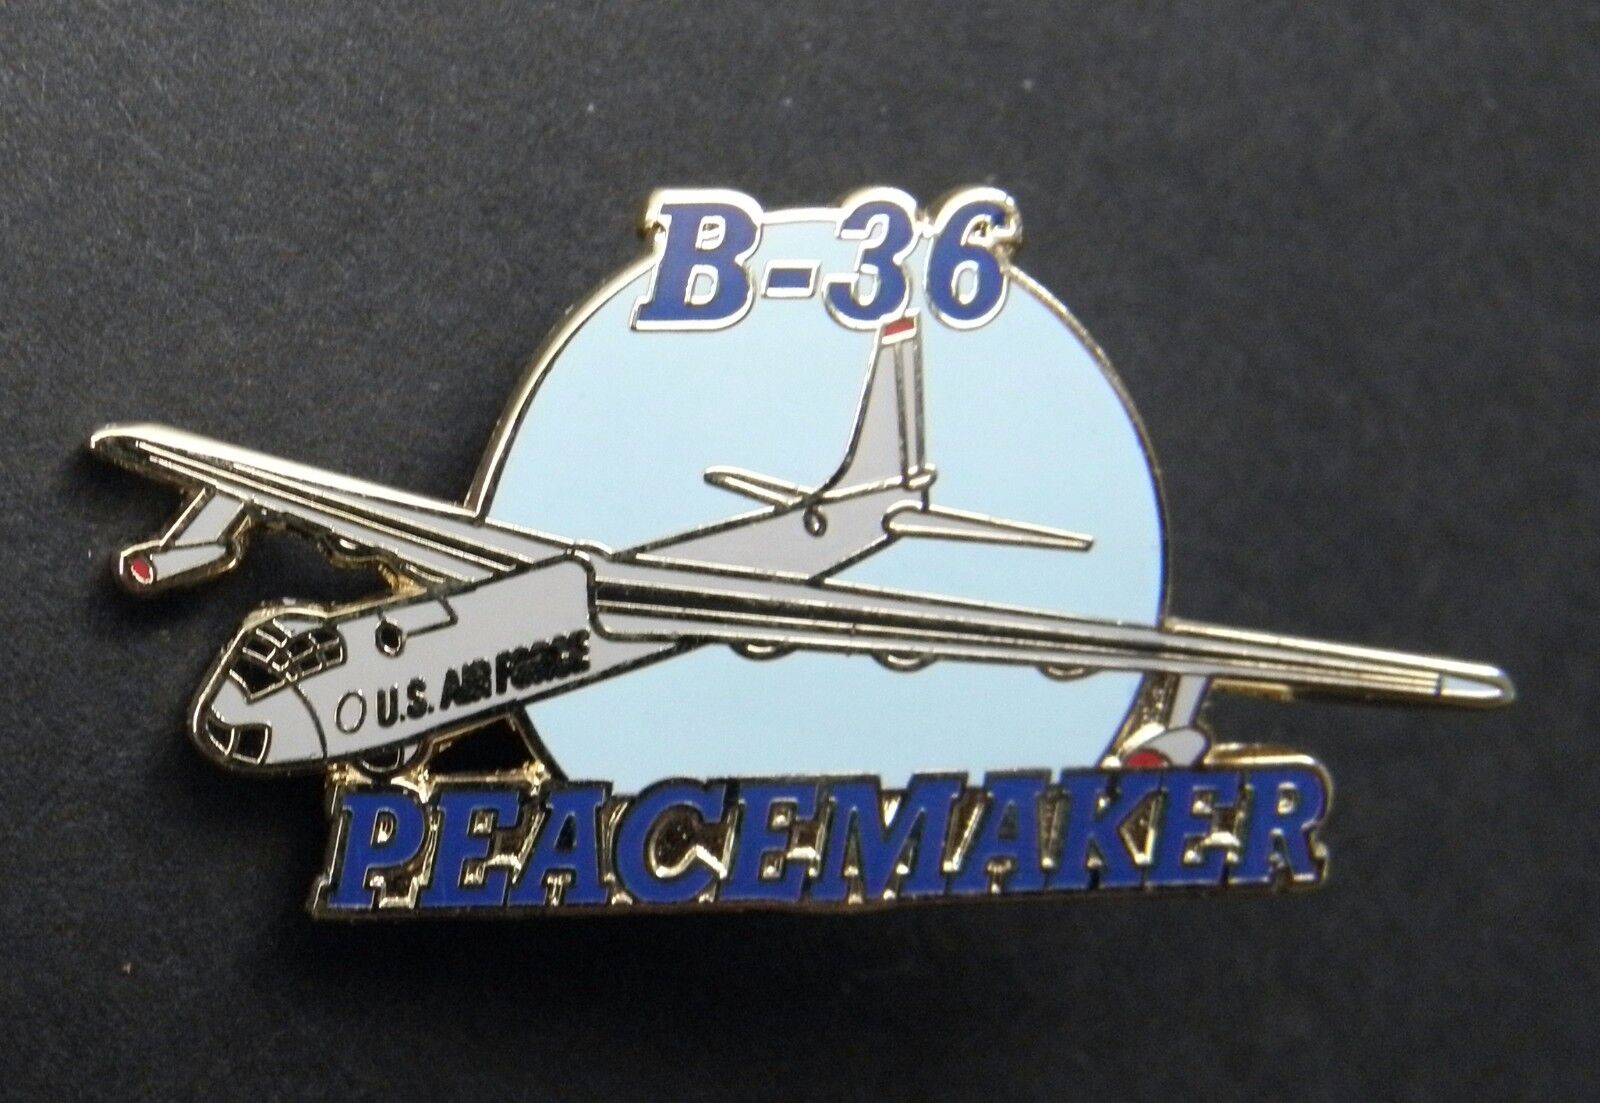 PEACEMAKER B-36 BOMBER USAF AIR FORCE AIRCRAFT LAPEL PIN BADGE 1.5 INCH CONVAIR